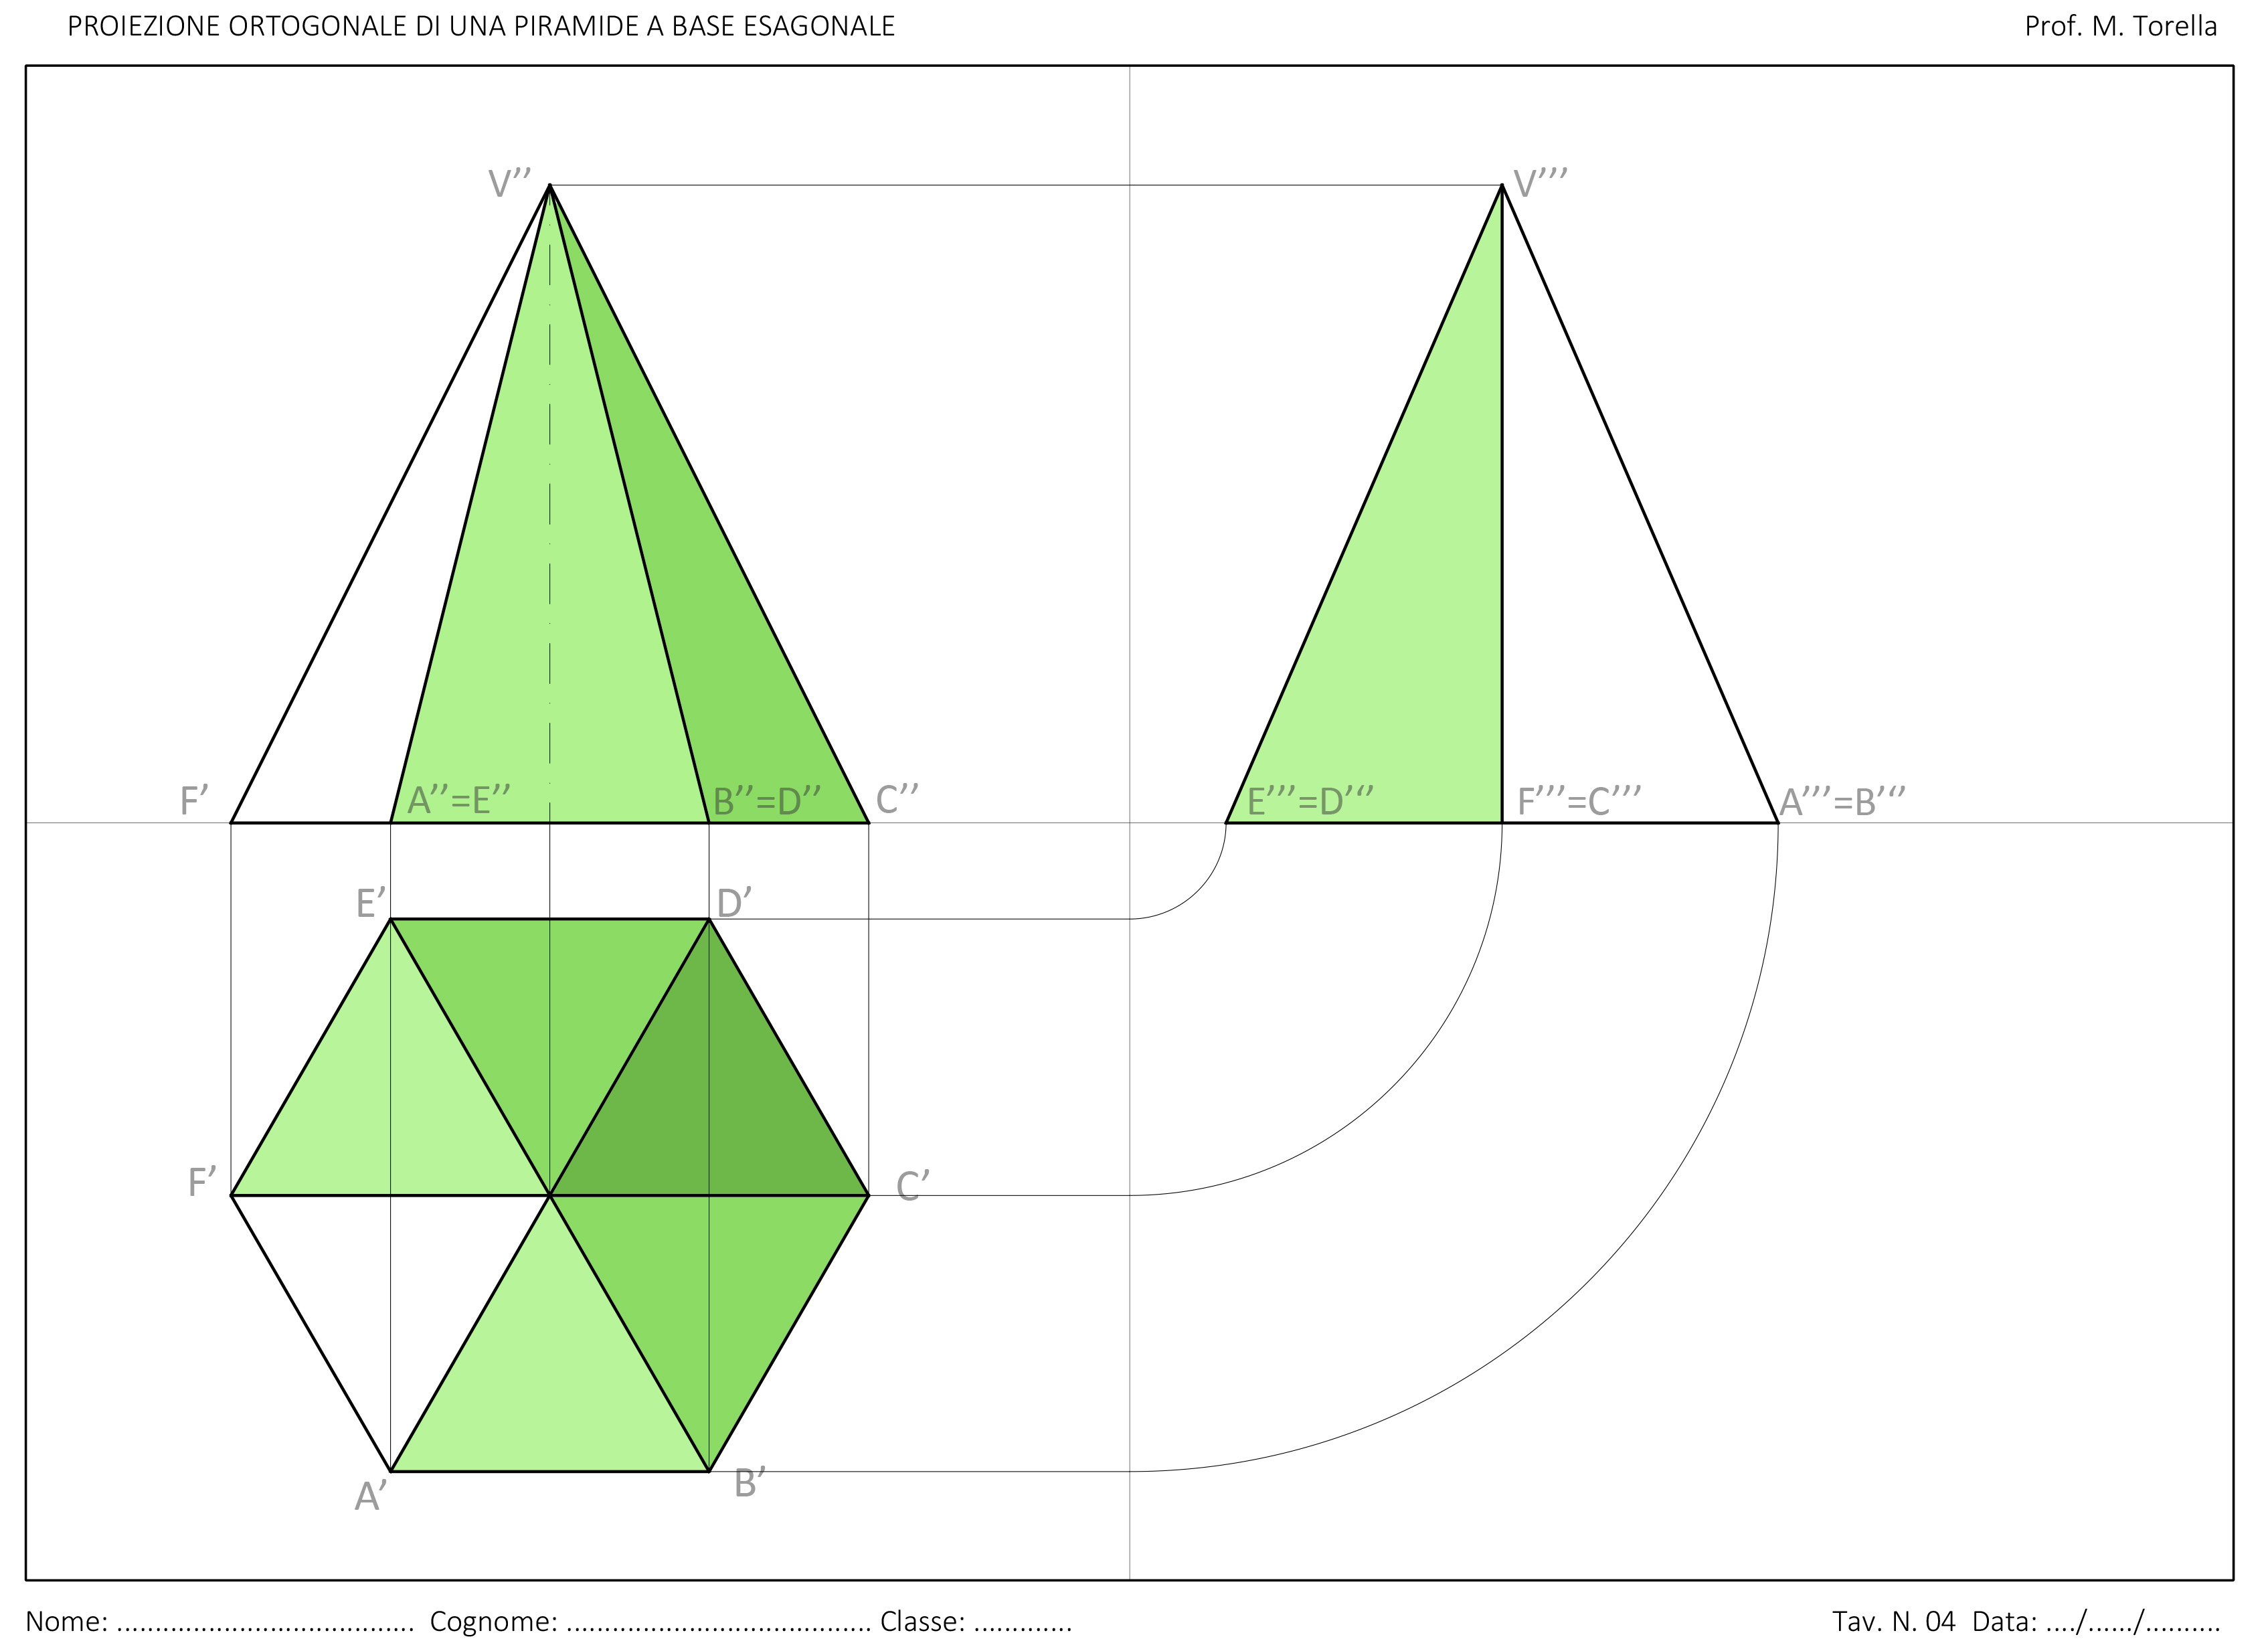 proiezione-ortogonale-piramide-esagonale